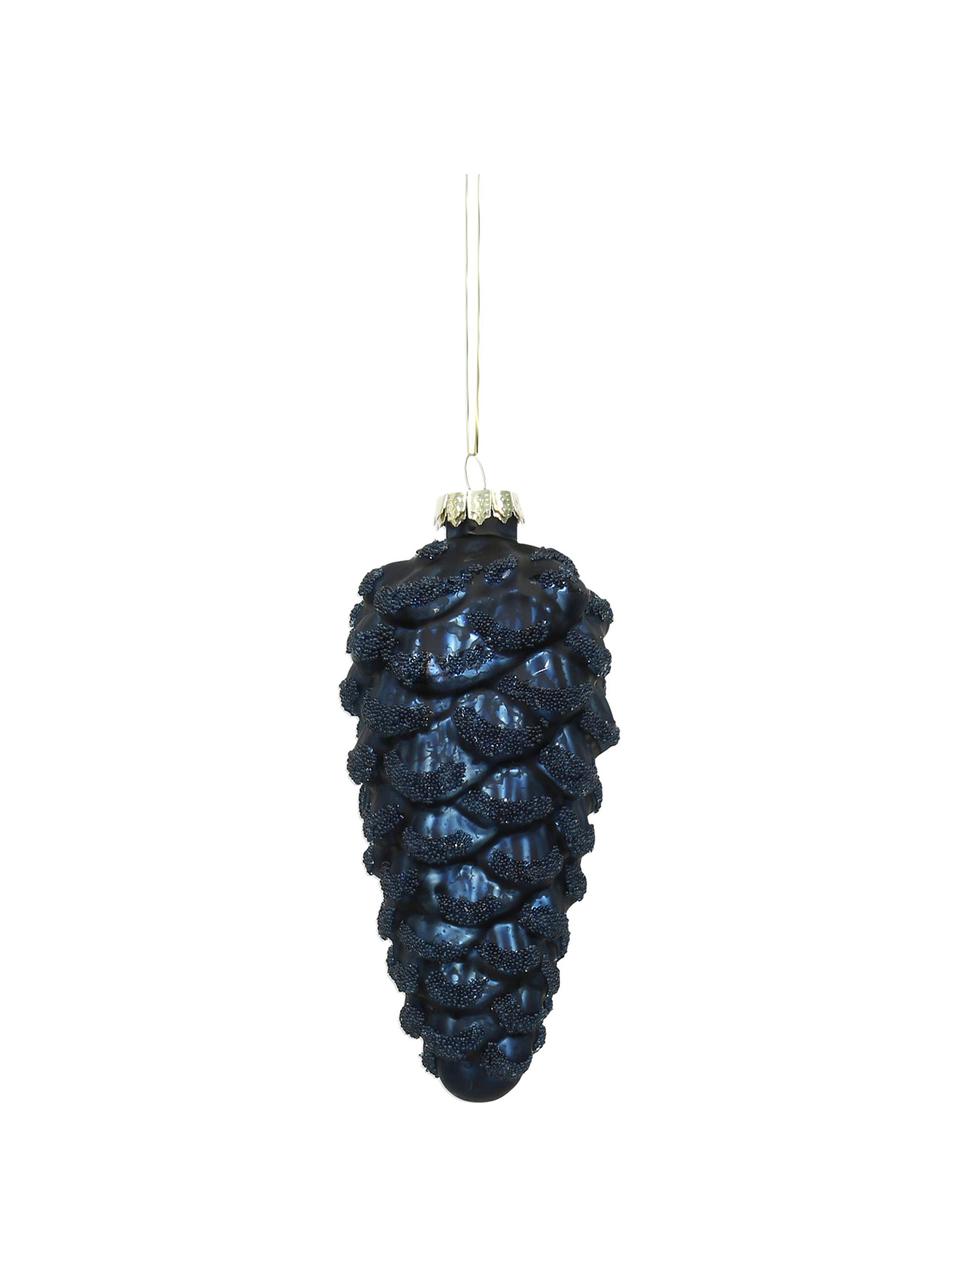 Baumanhänger Cone in Blau, 4 Stück, Dunkelblau, glänzend, Ø 6 x H 14 cm